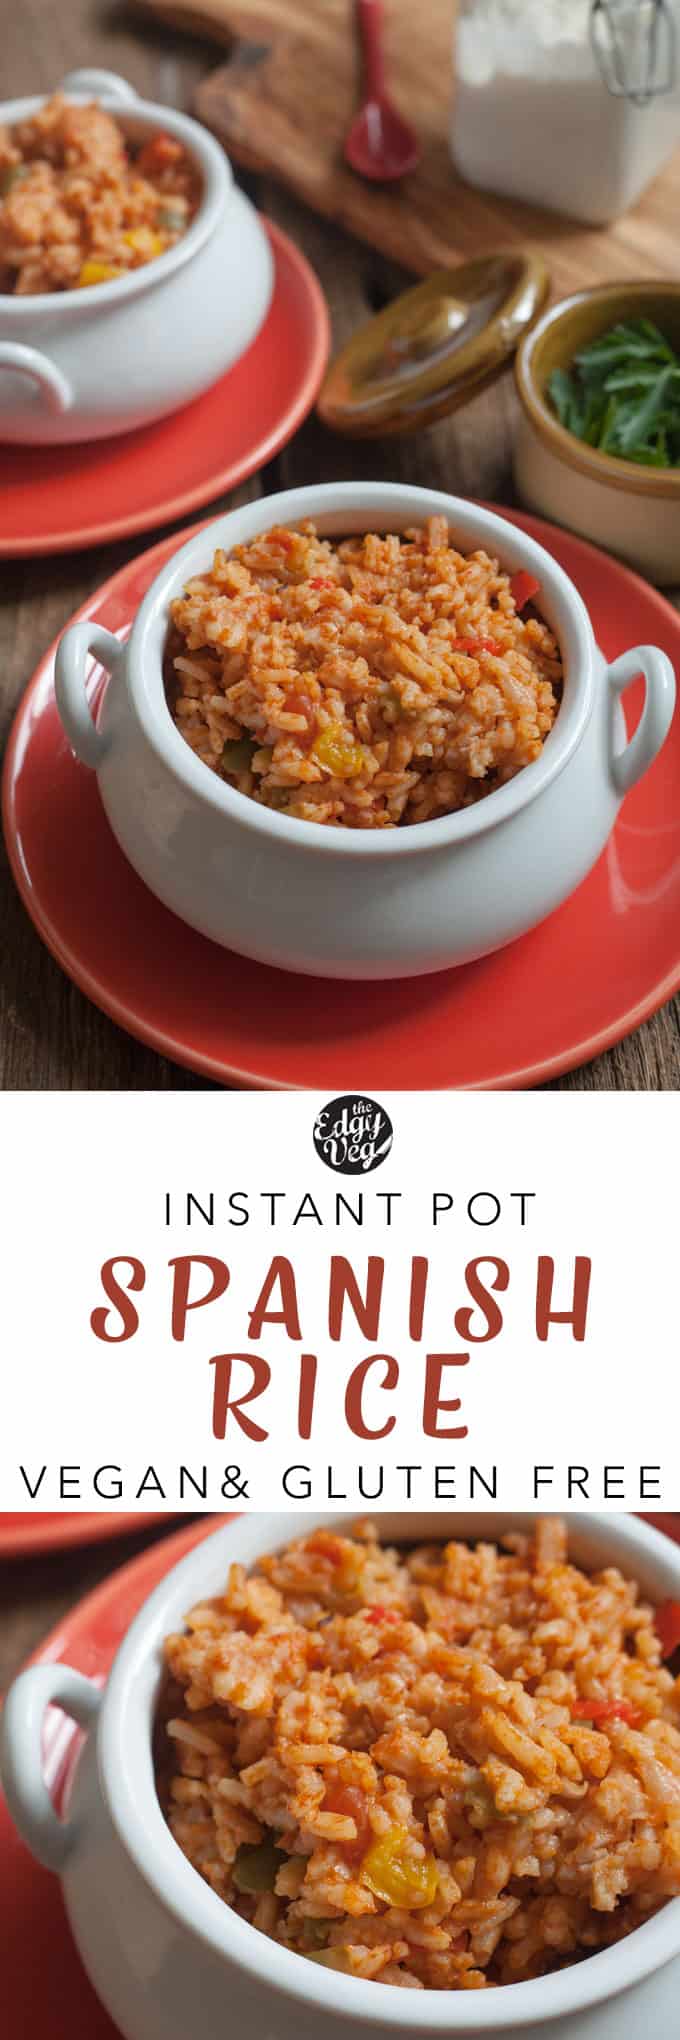 Spanish rice instant pot